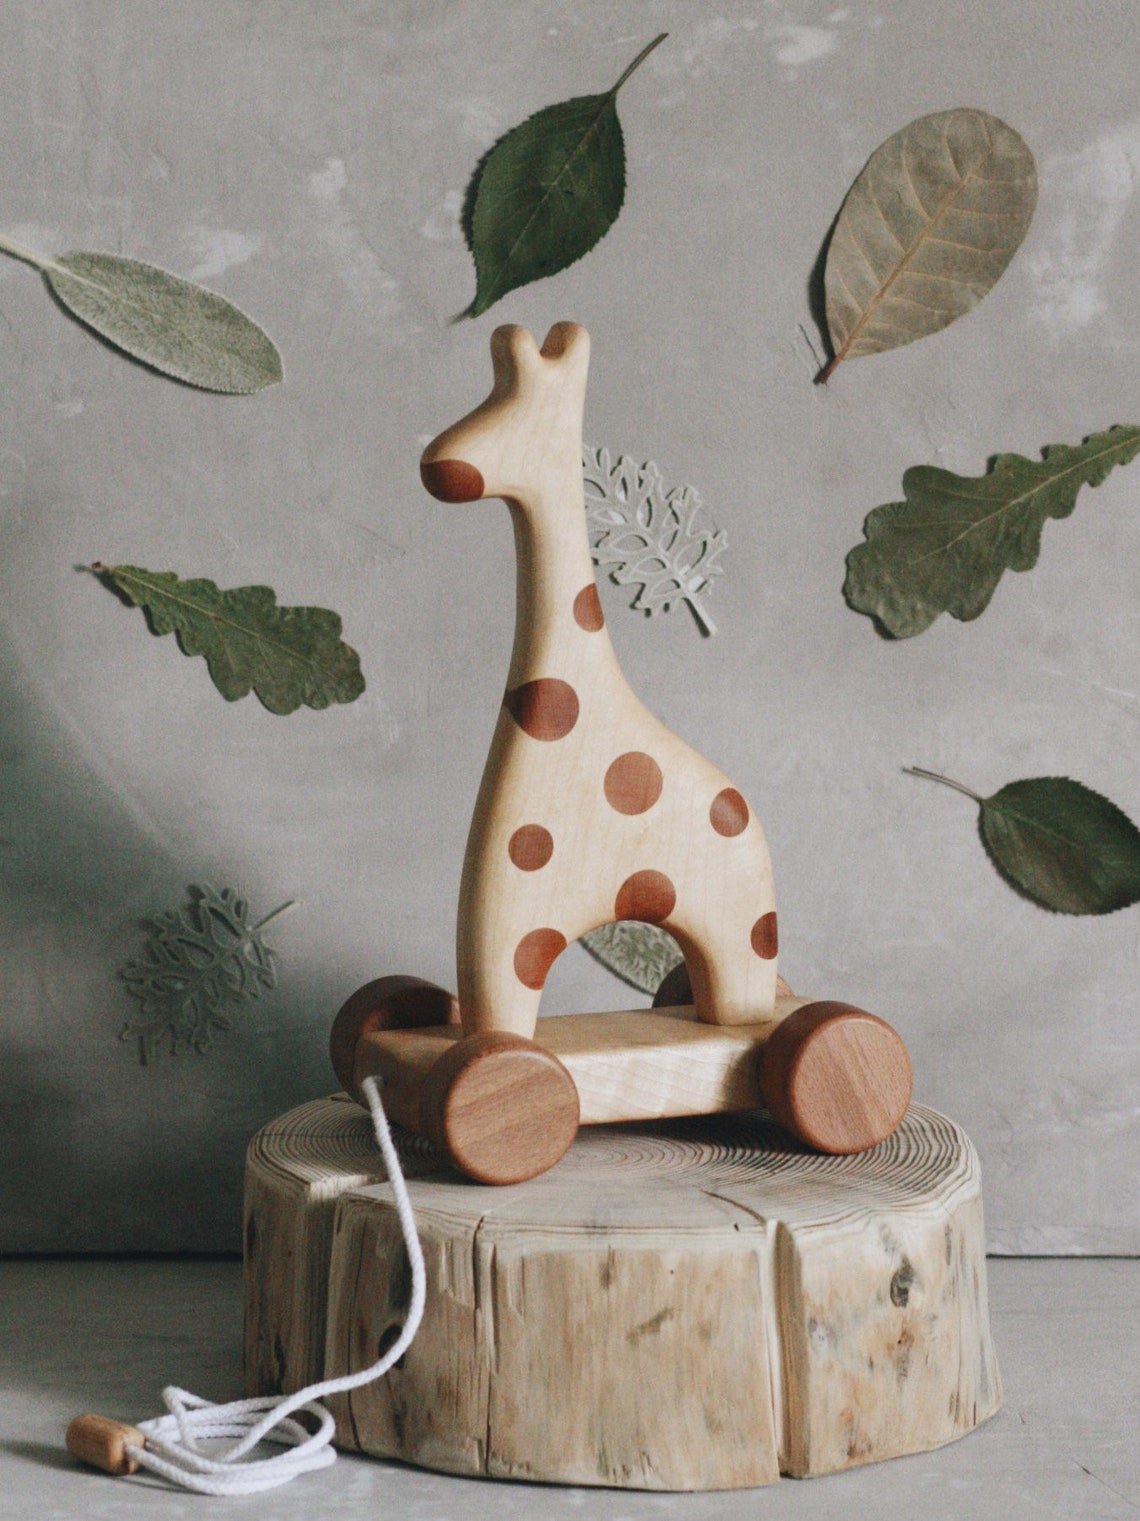 girafe-roulette-bois-idees-cadeaux-0-3-ans-noemiememories.jpg